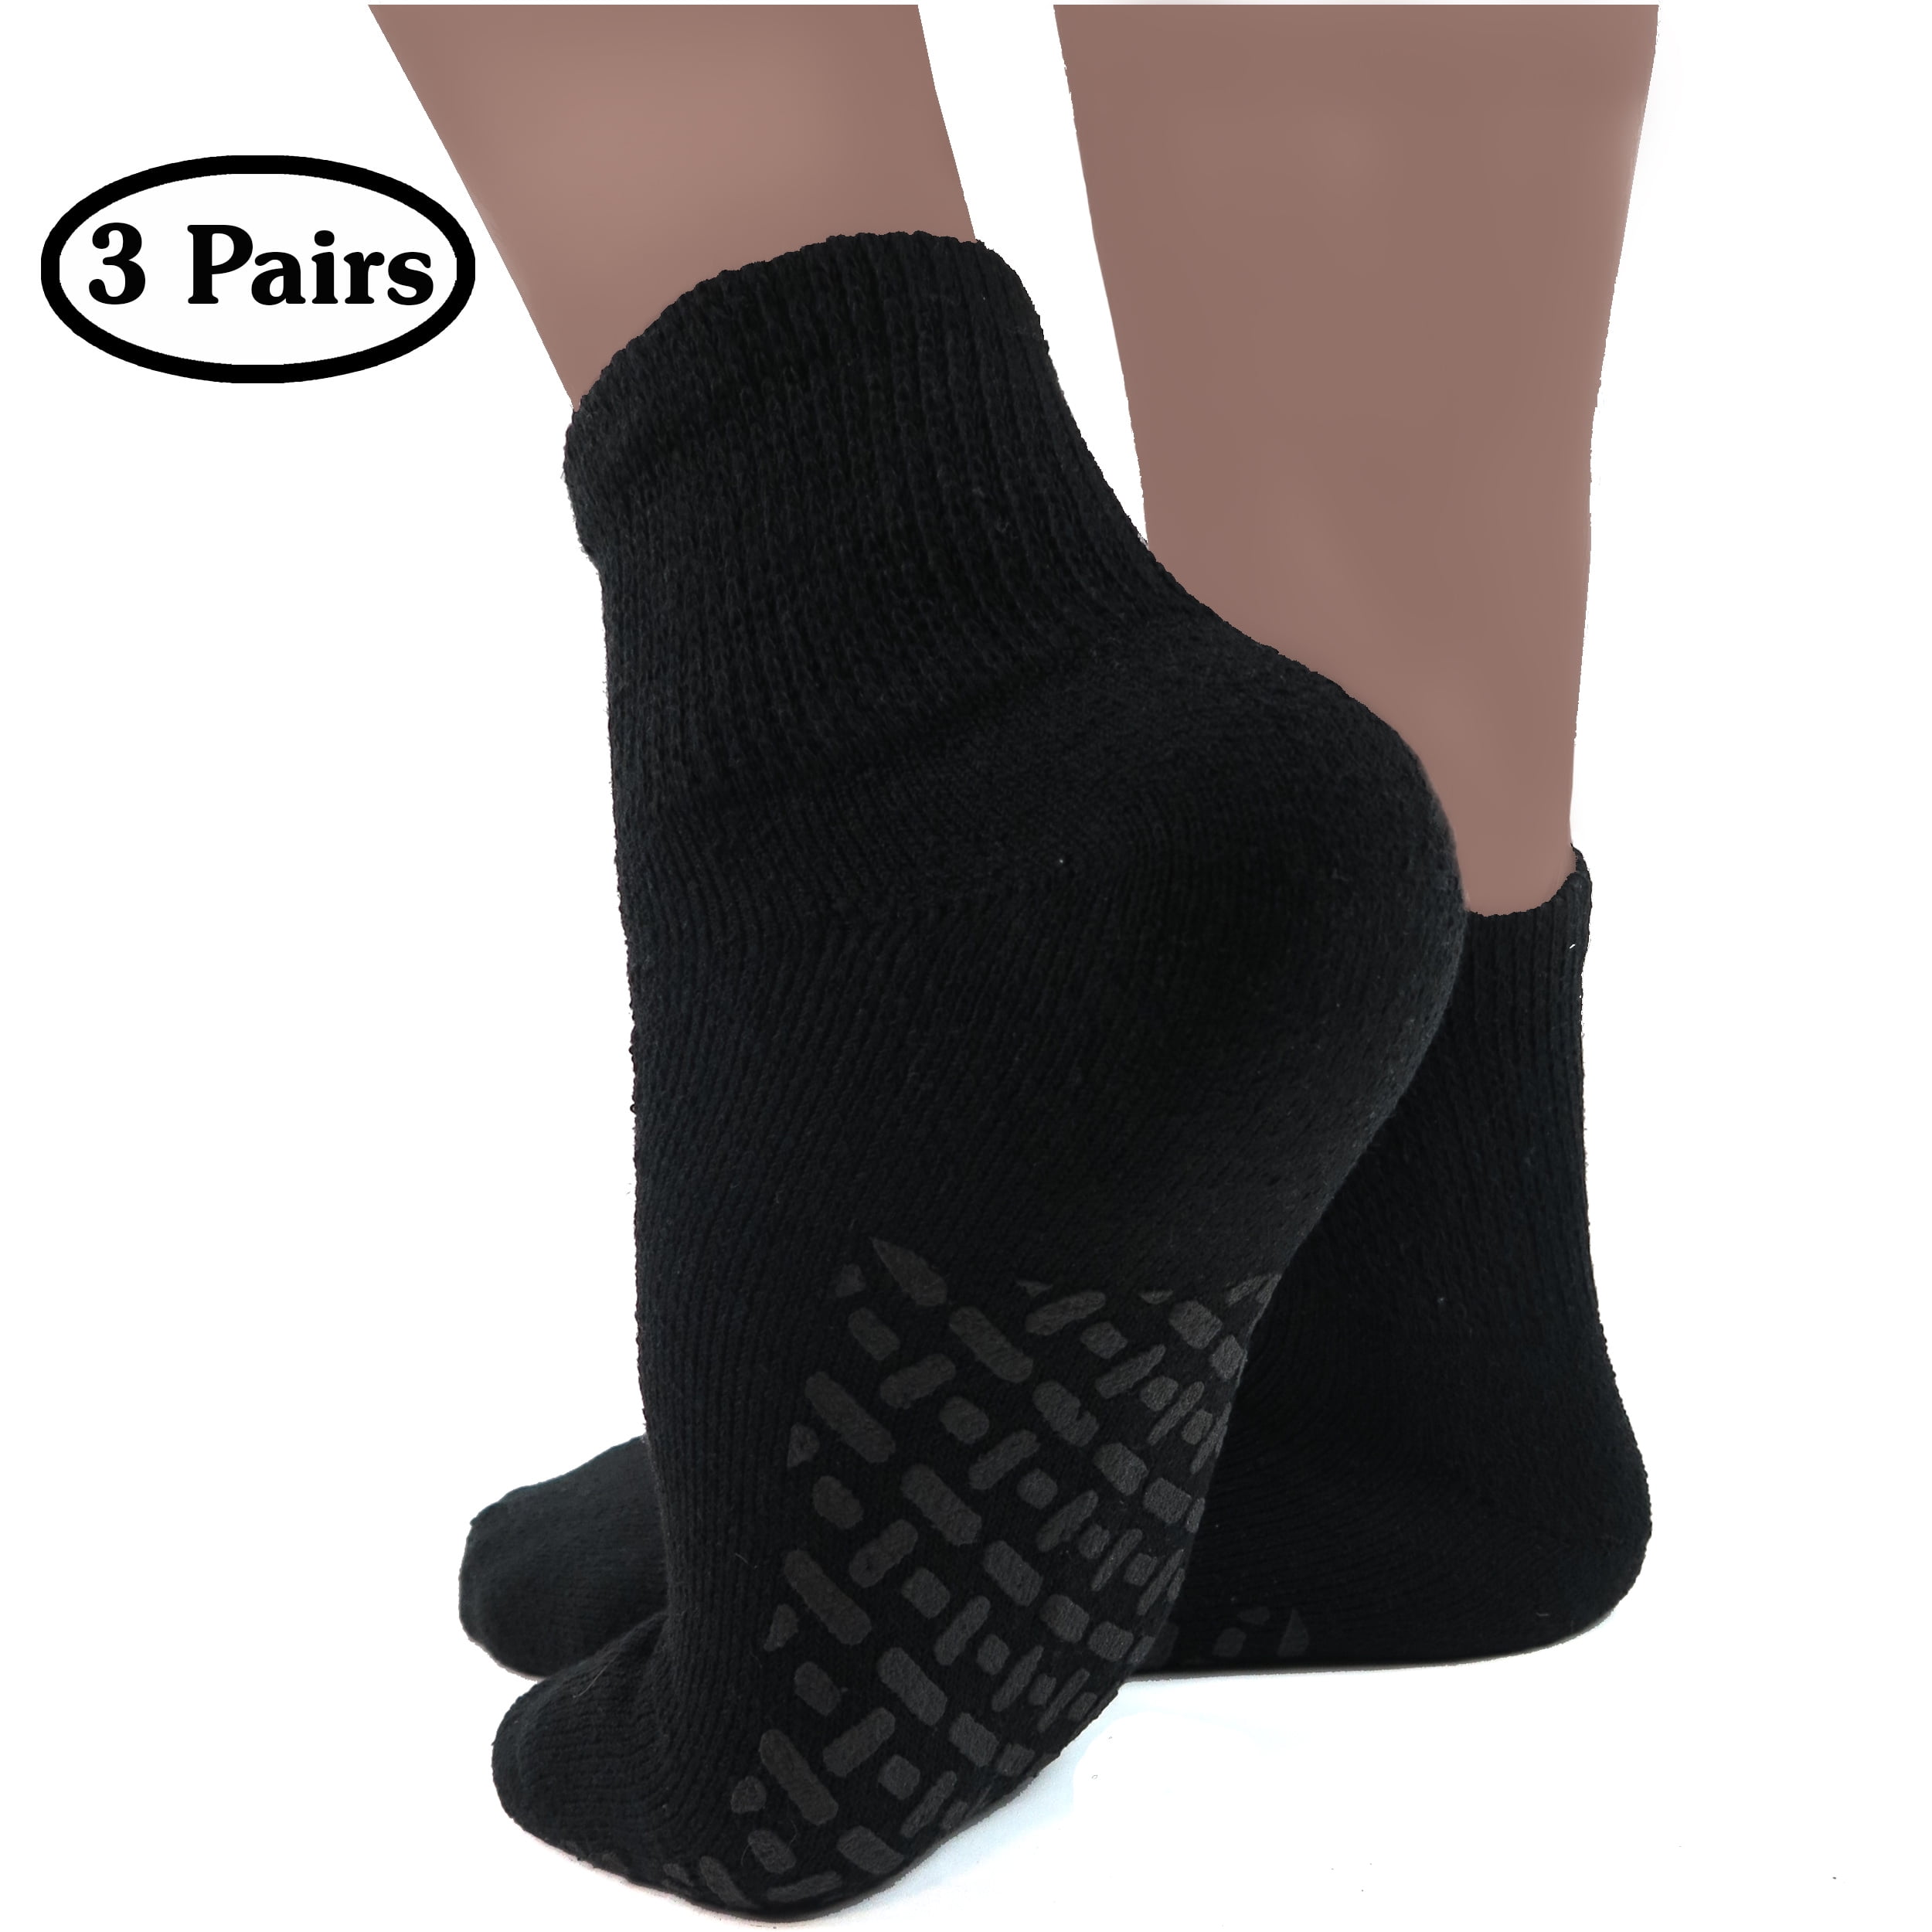 mens diabetic gripper socks